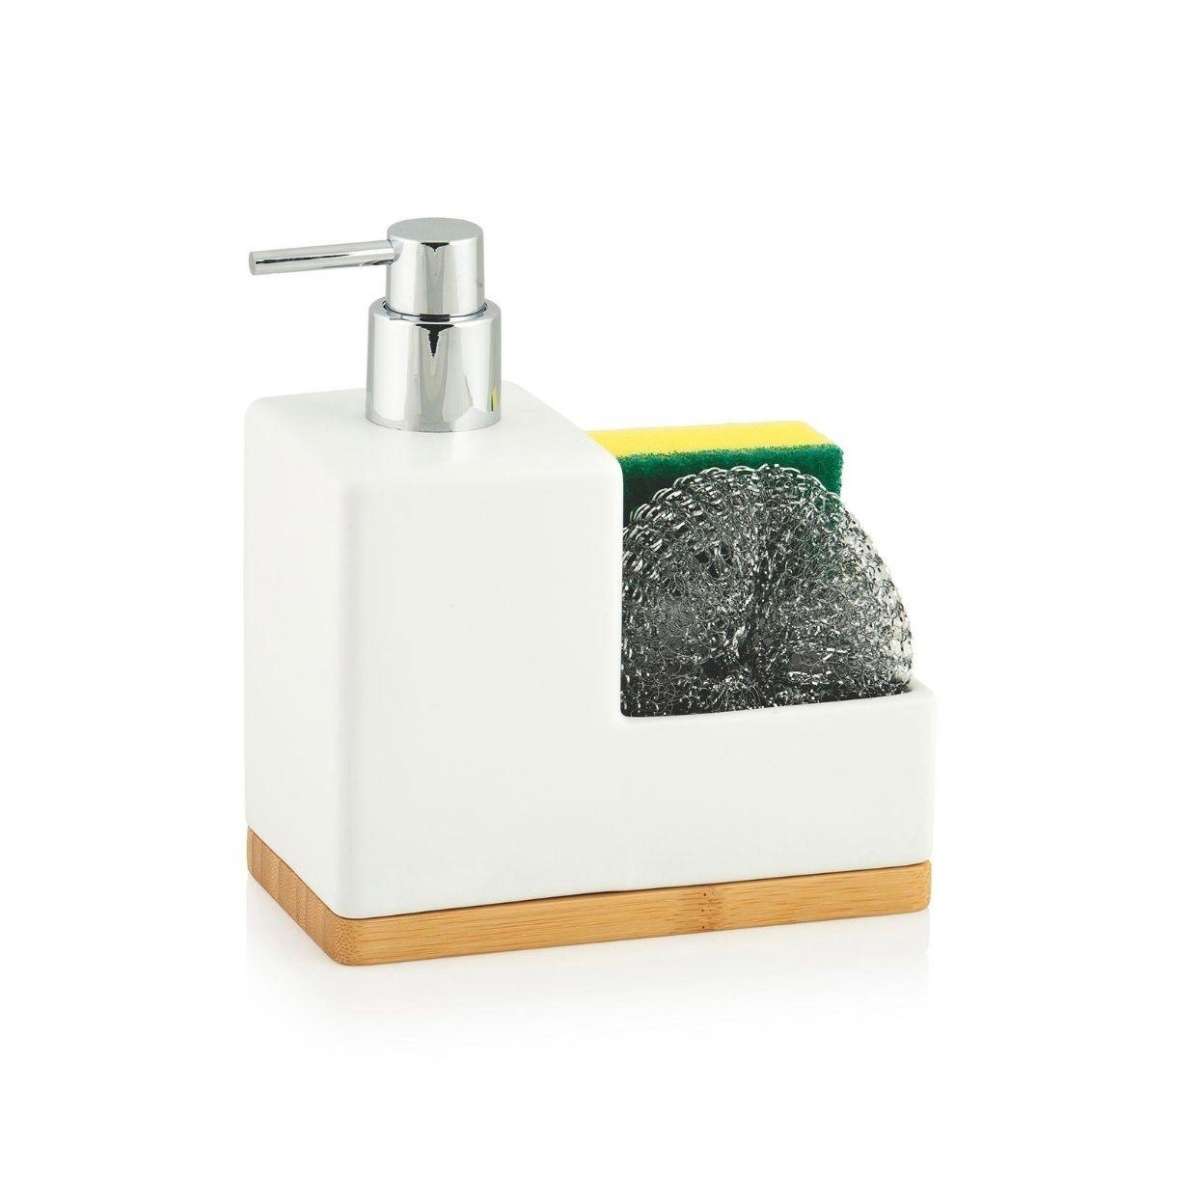 Immagine del prodotto Dispenser da Cucina in Ceramica bianca e Bambù + Spugne | A. House